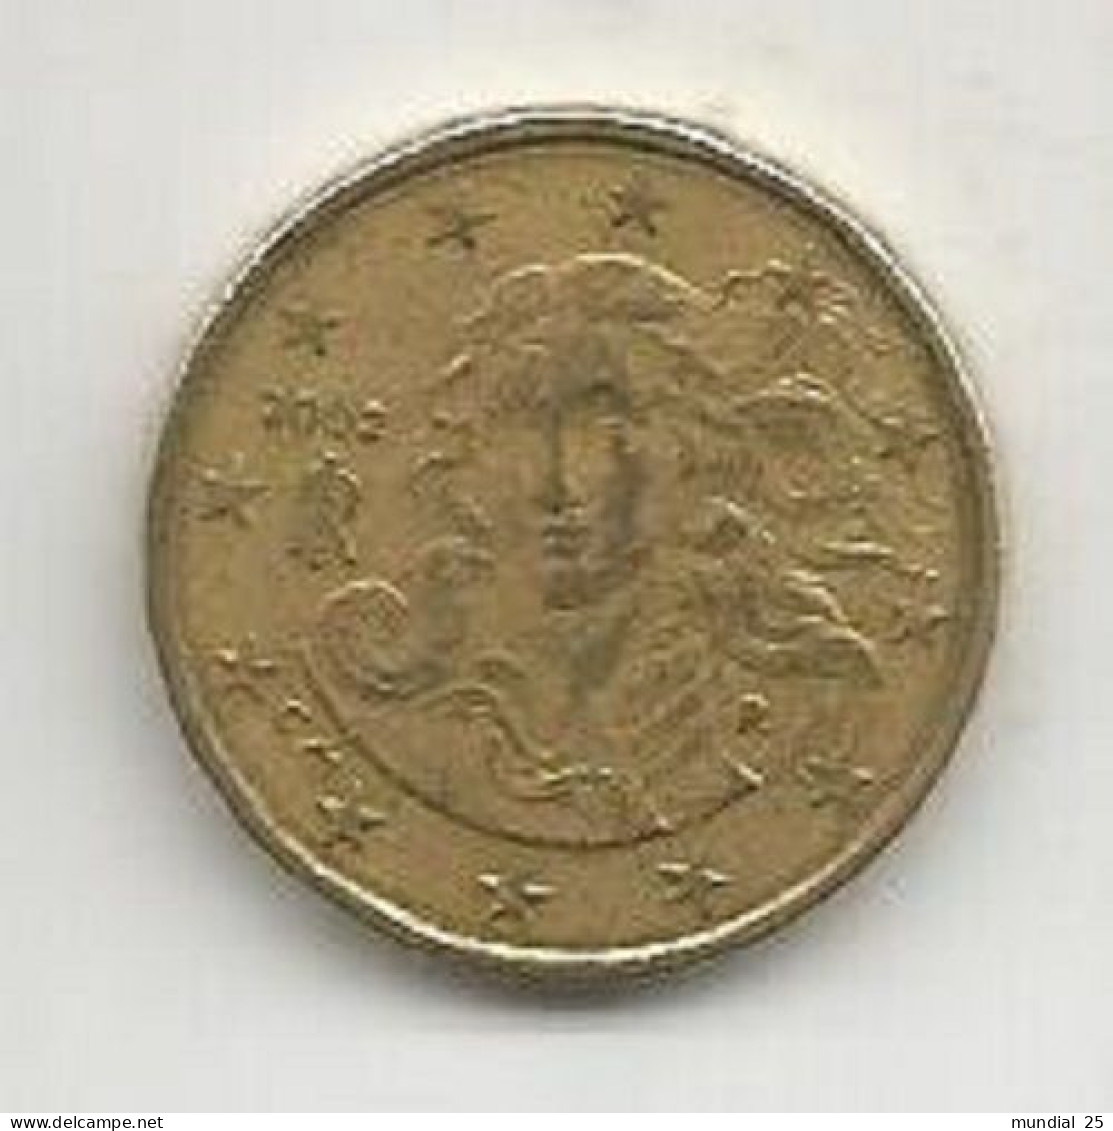 ITALY 10 EURO CENT 2002 (R) - Italien